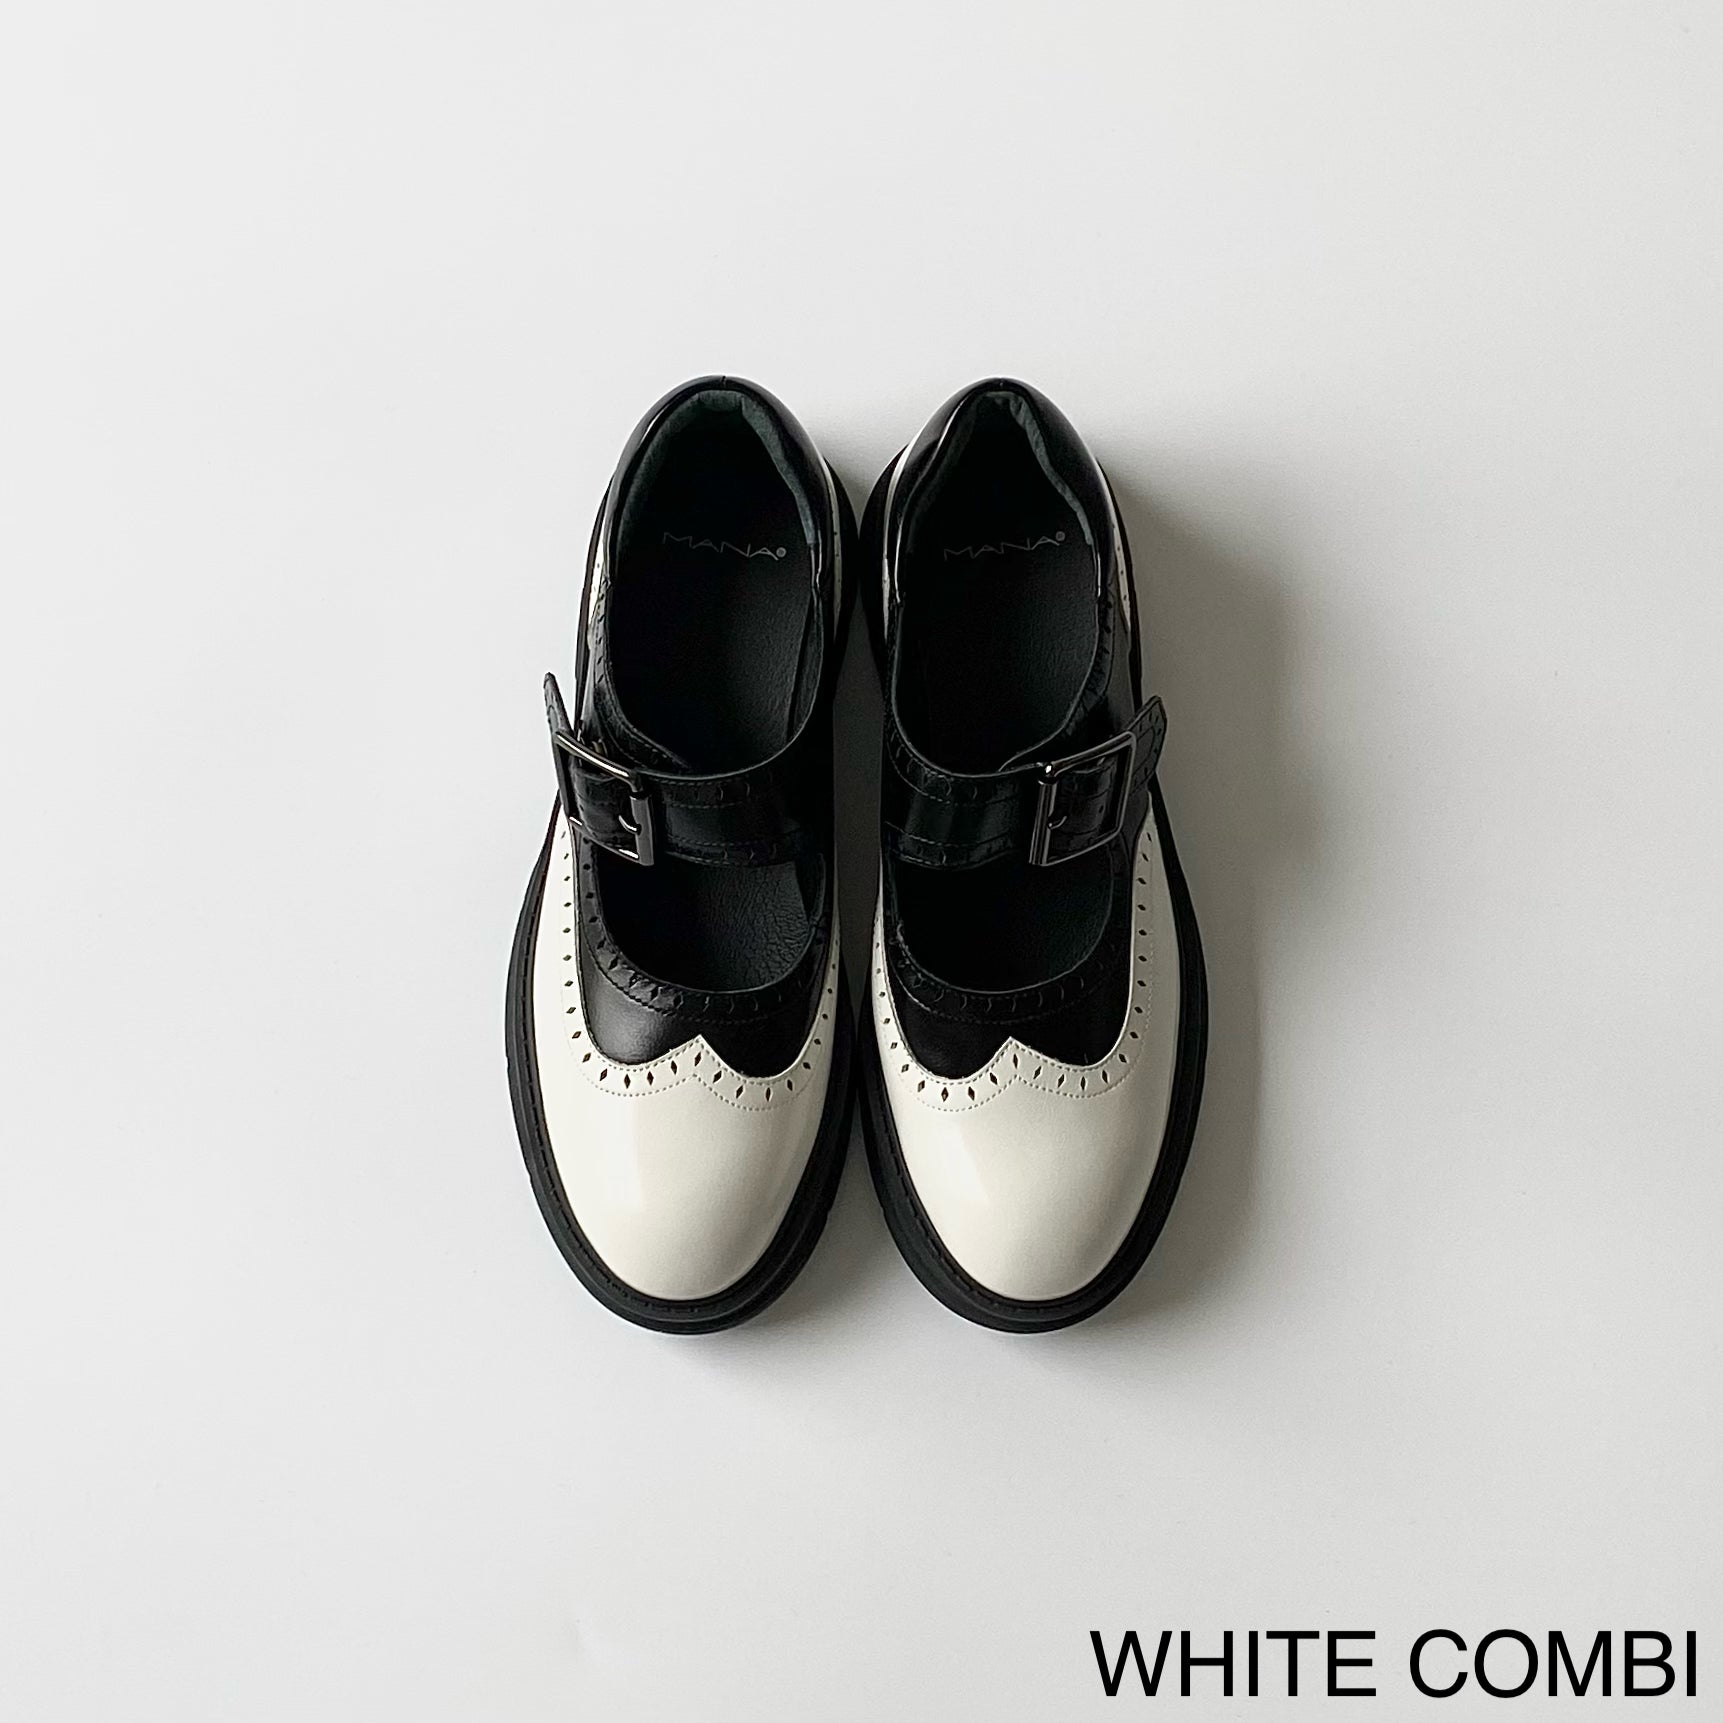 WHITE COMBI / 35 (22.5cm)